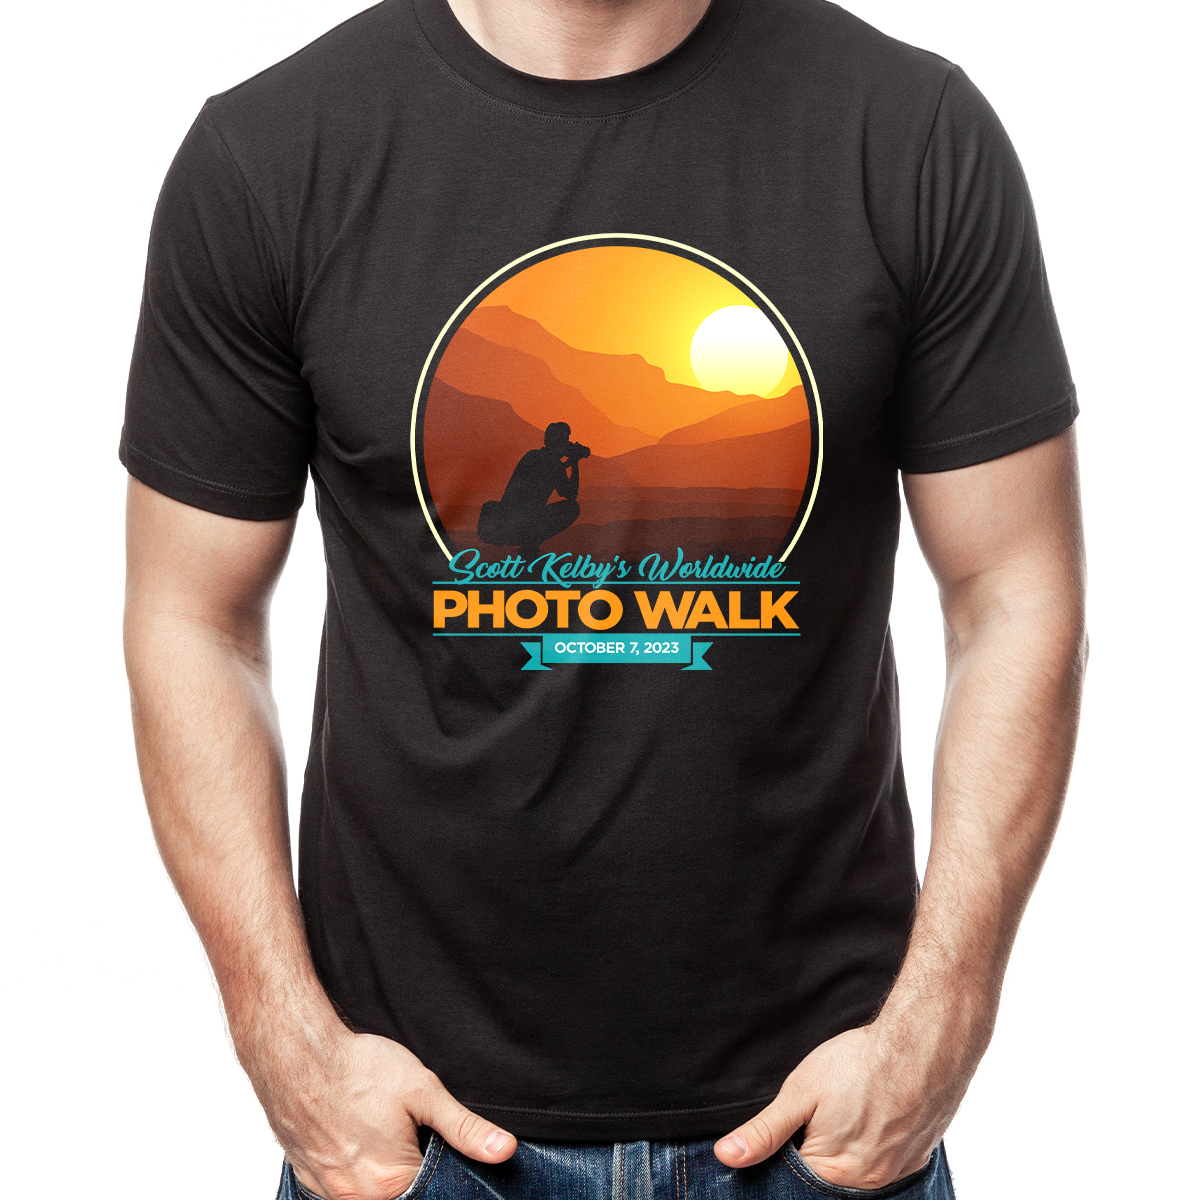 Scott Kelby's Worldwide Photo Walk – The World's Largest Photo Walk Event